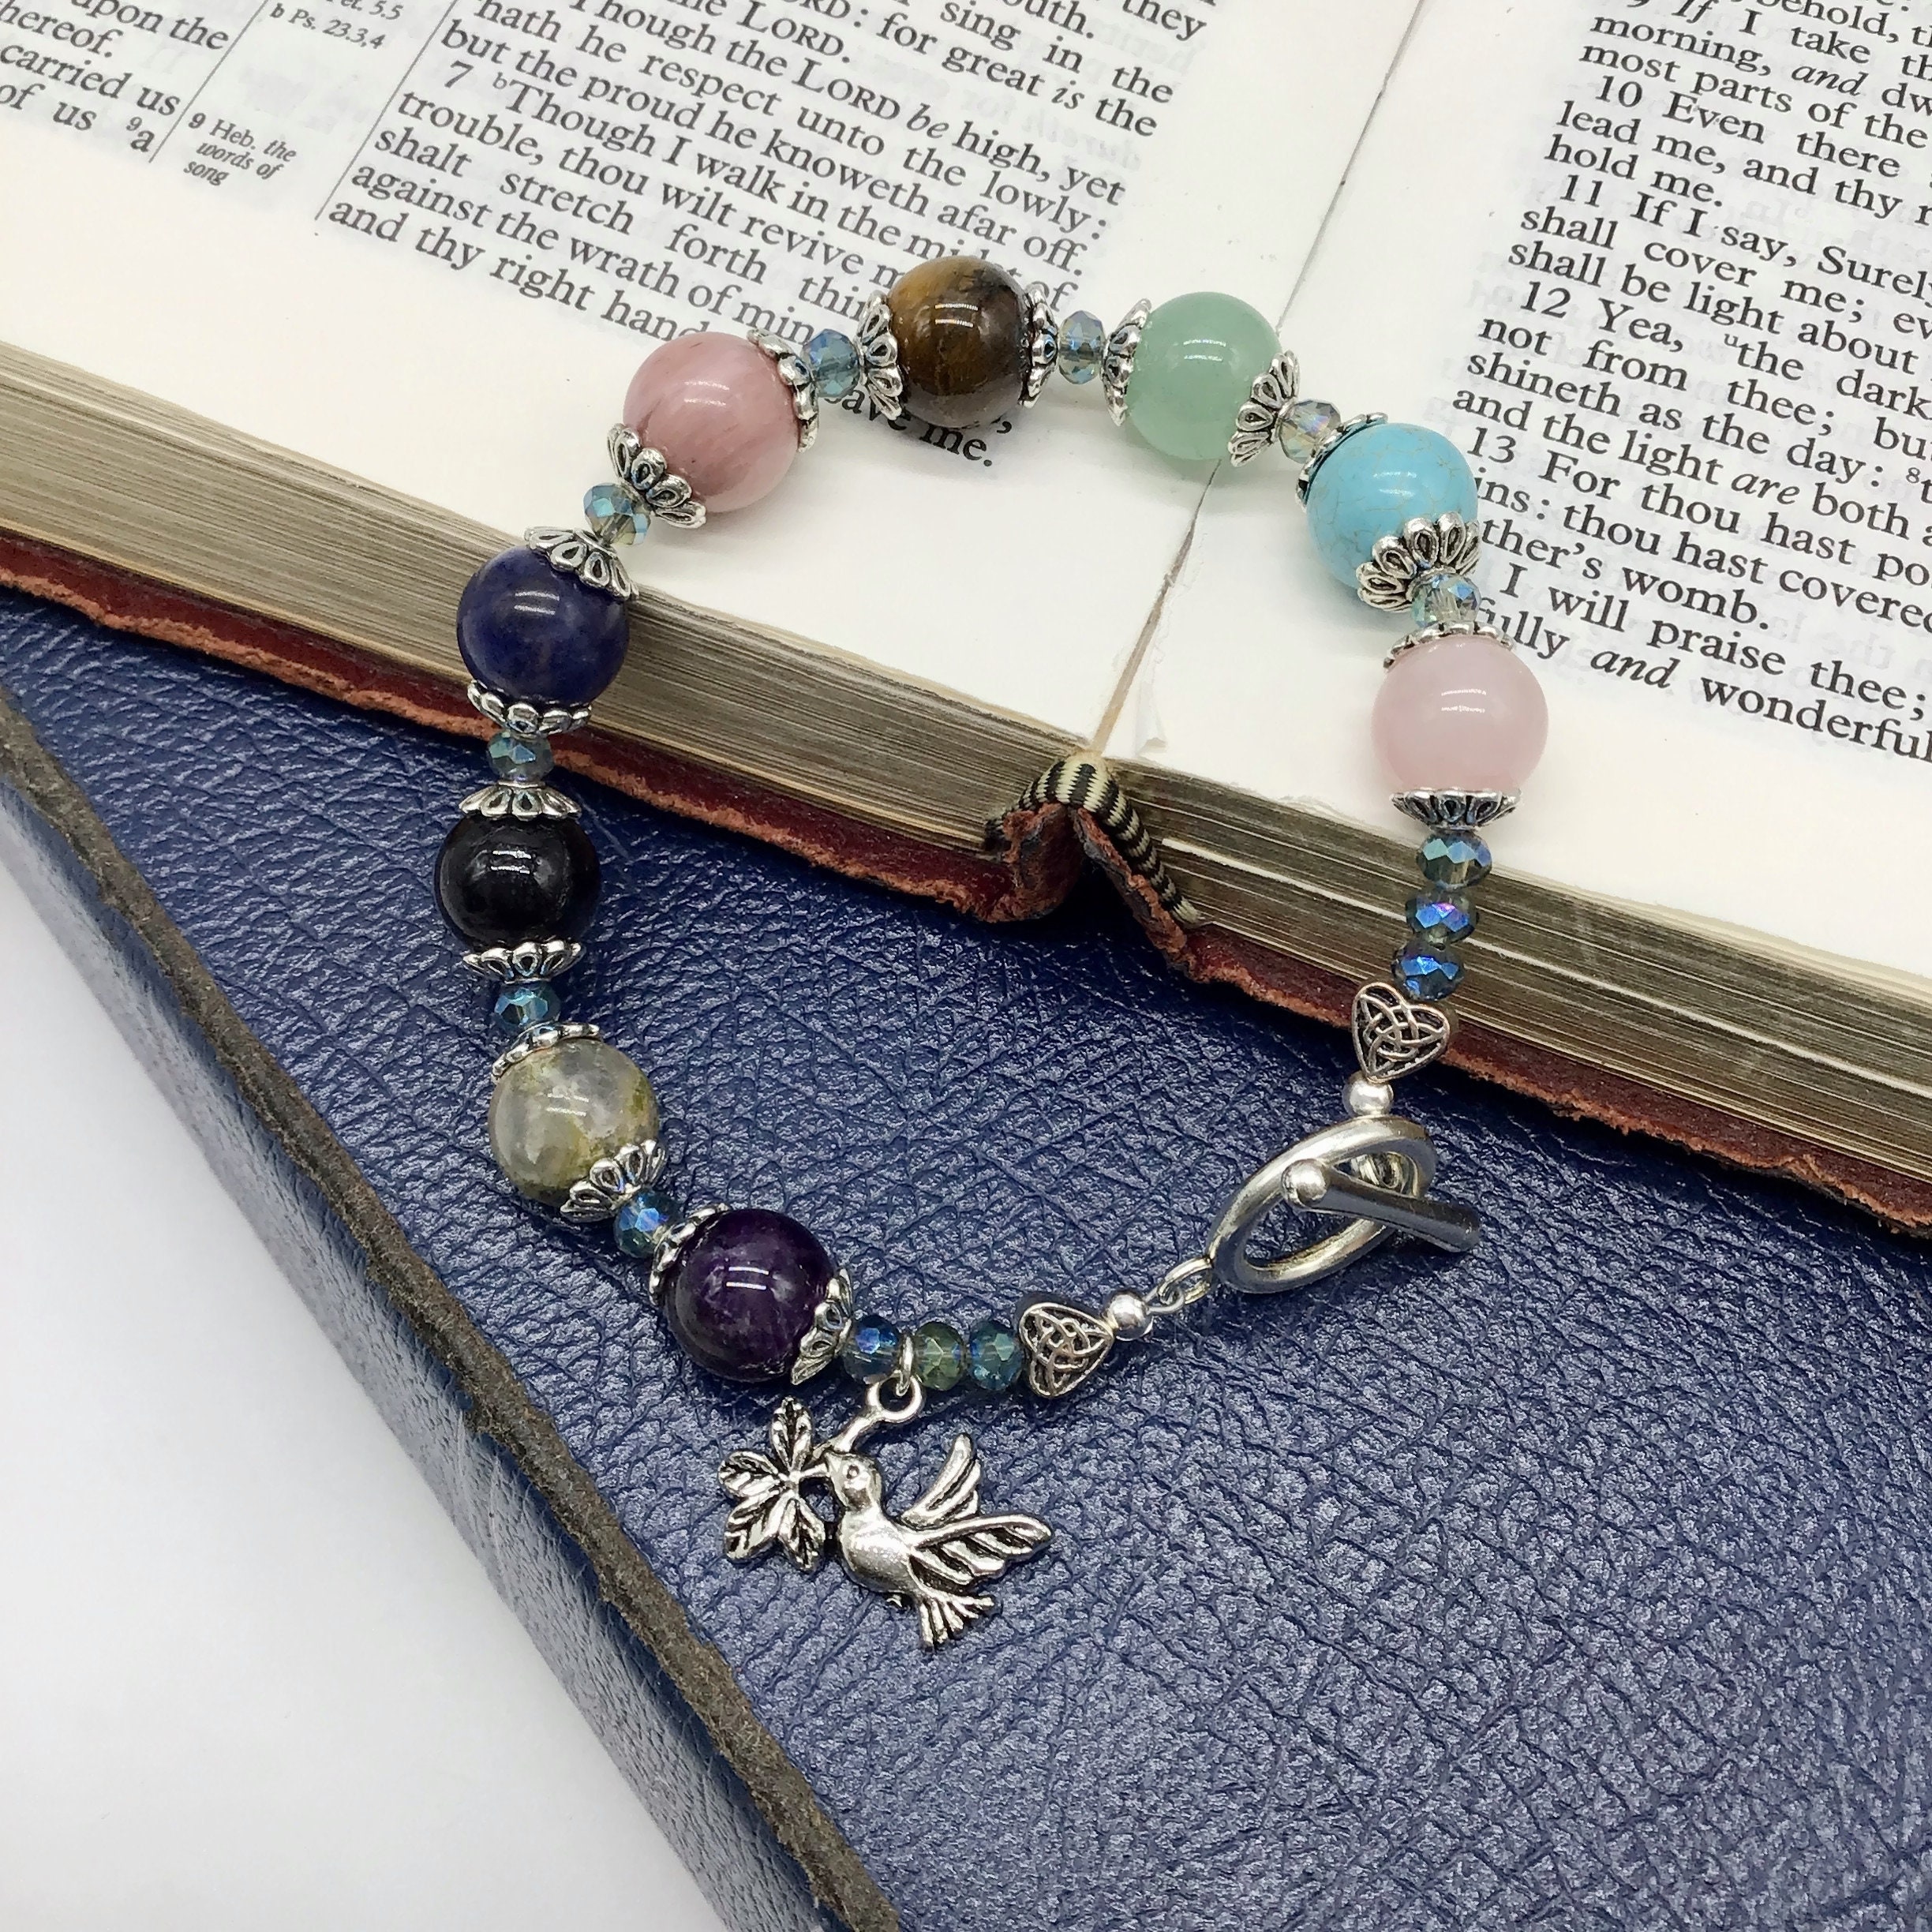 Fruit of the Spirit Scripture Bracelet – Galatians 5 Glass Charm Stainless  Steel Bible Verse Bracelet